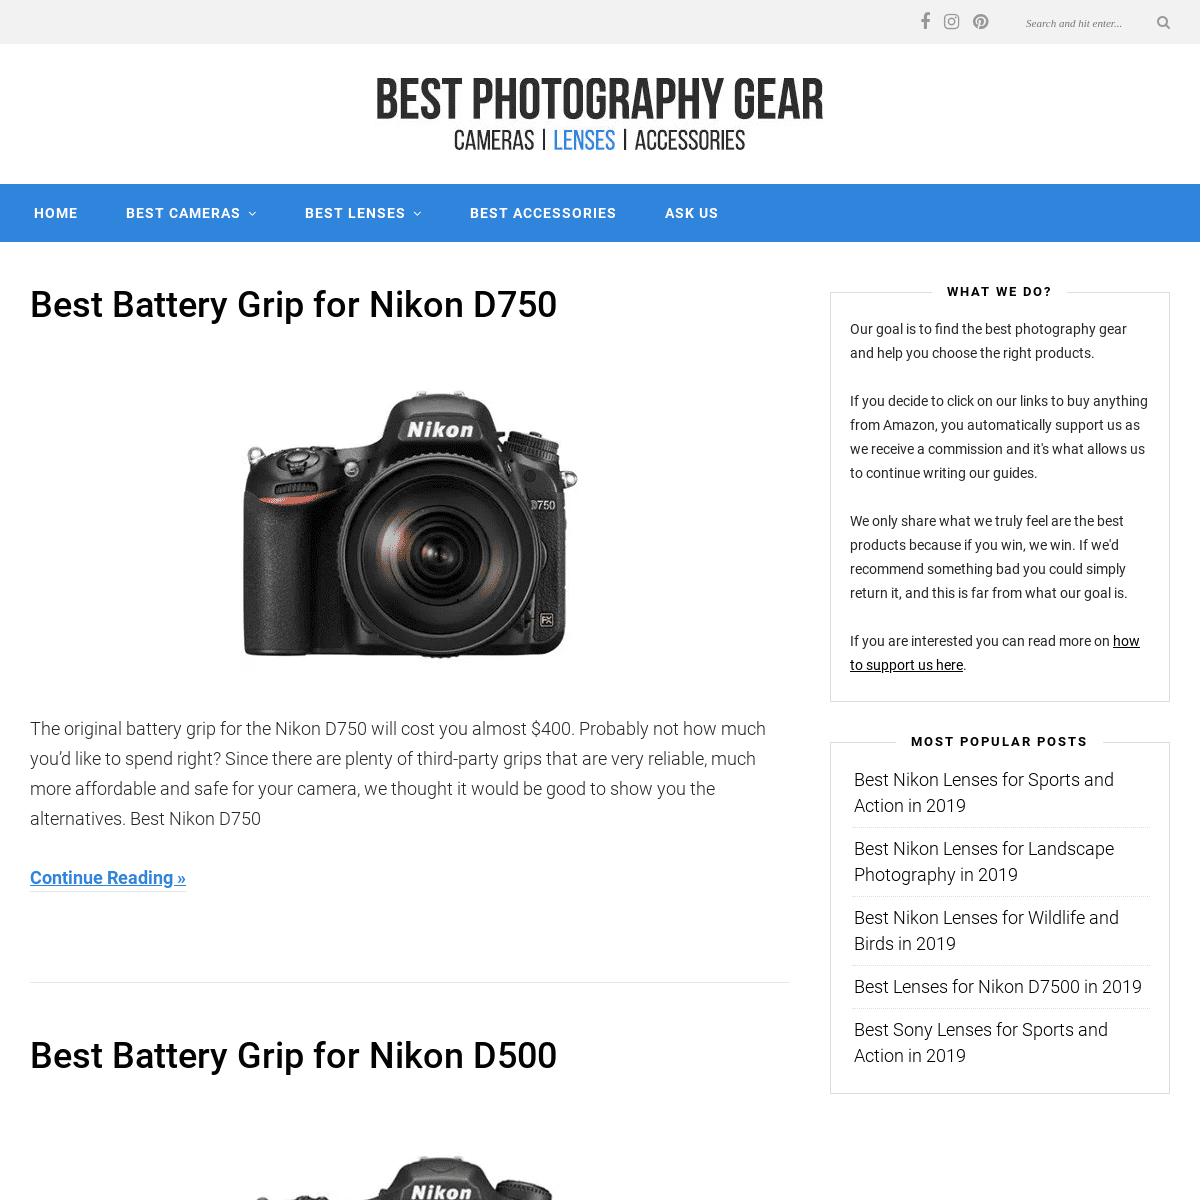 A complete backup of bestphotographygear.com